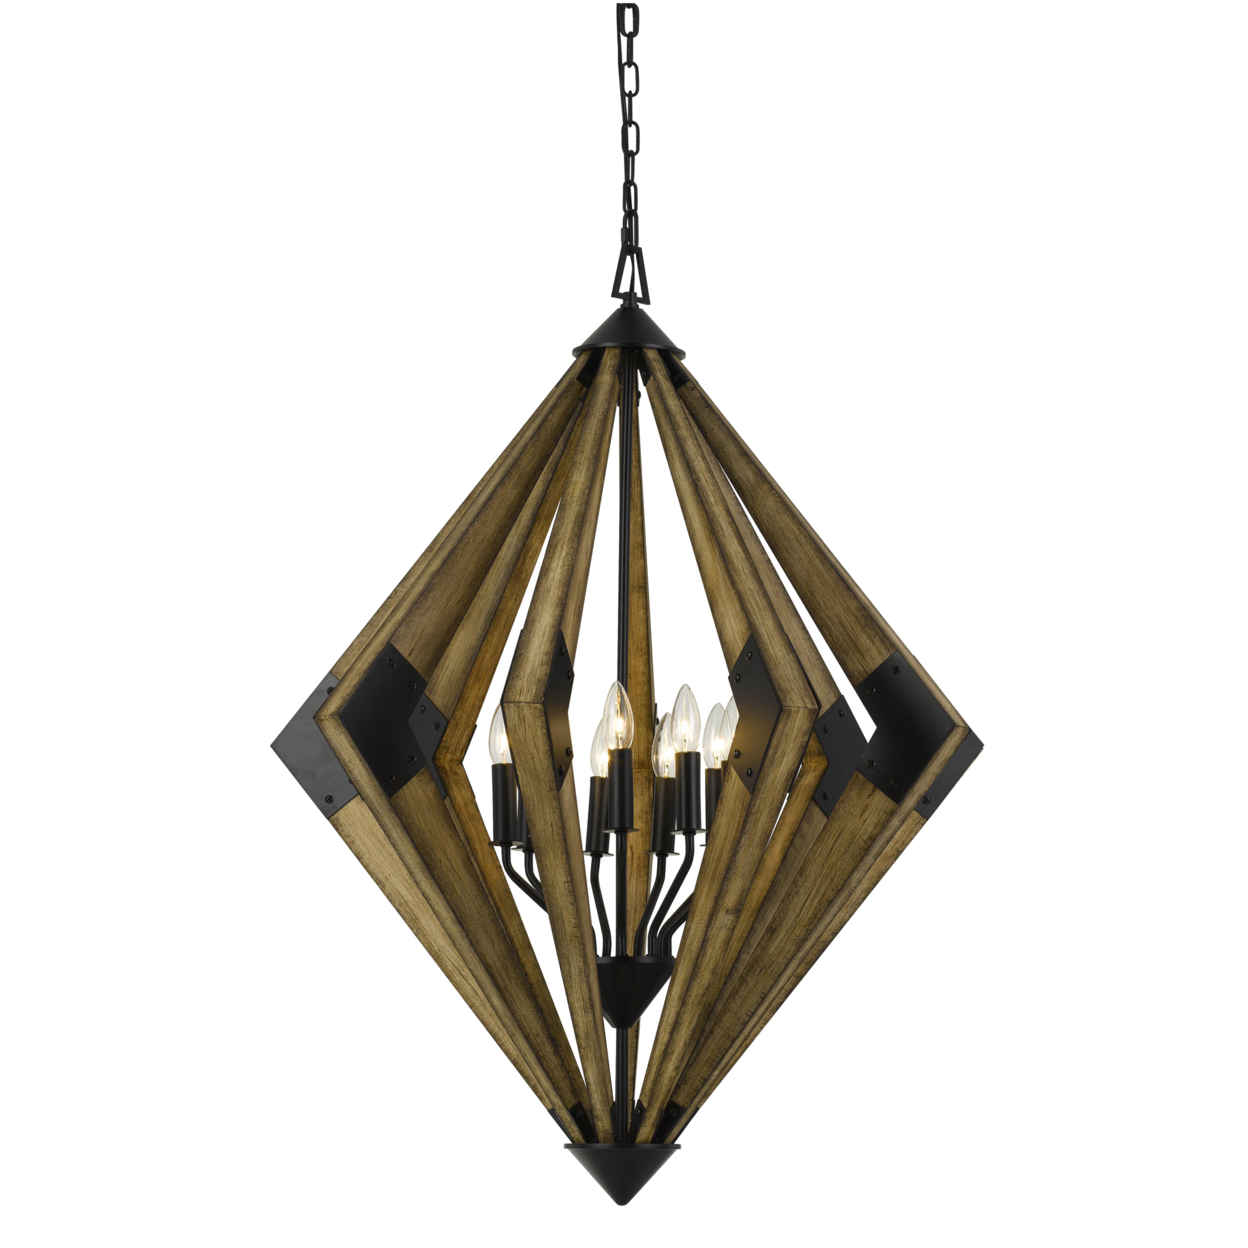 9 Bulb Diamond Shape Wooden Chandelier With Metal Accents, Brown- Saltoro Sherpi